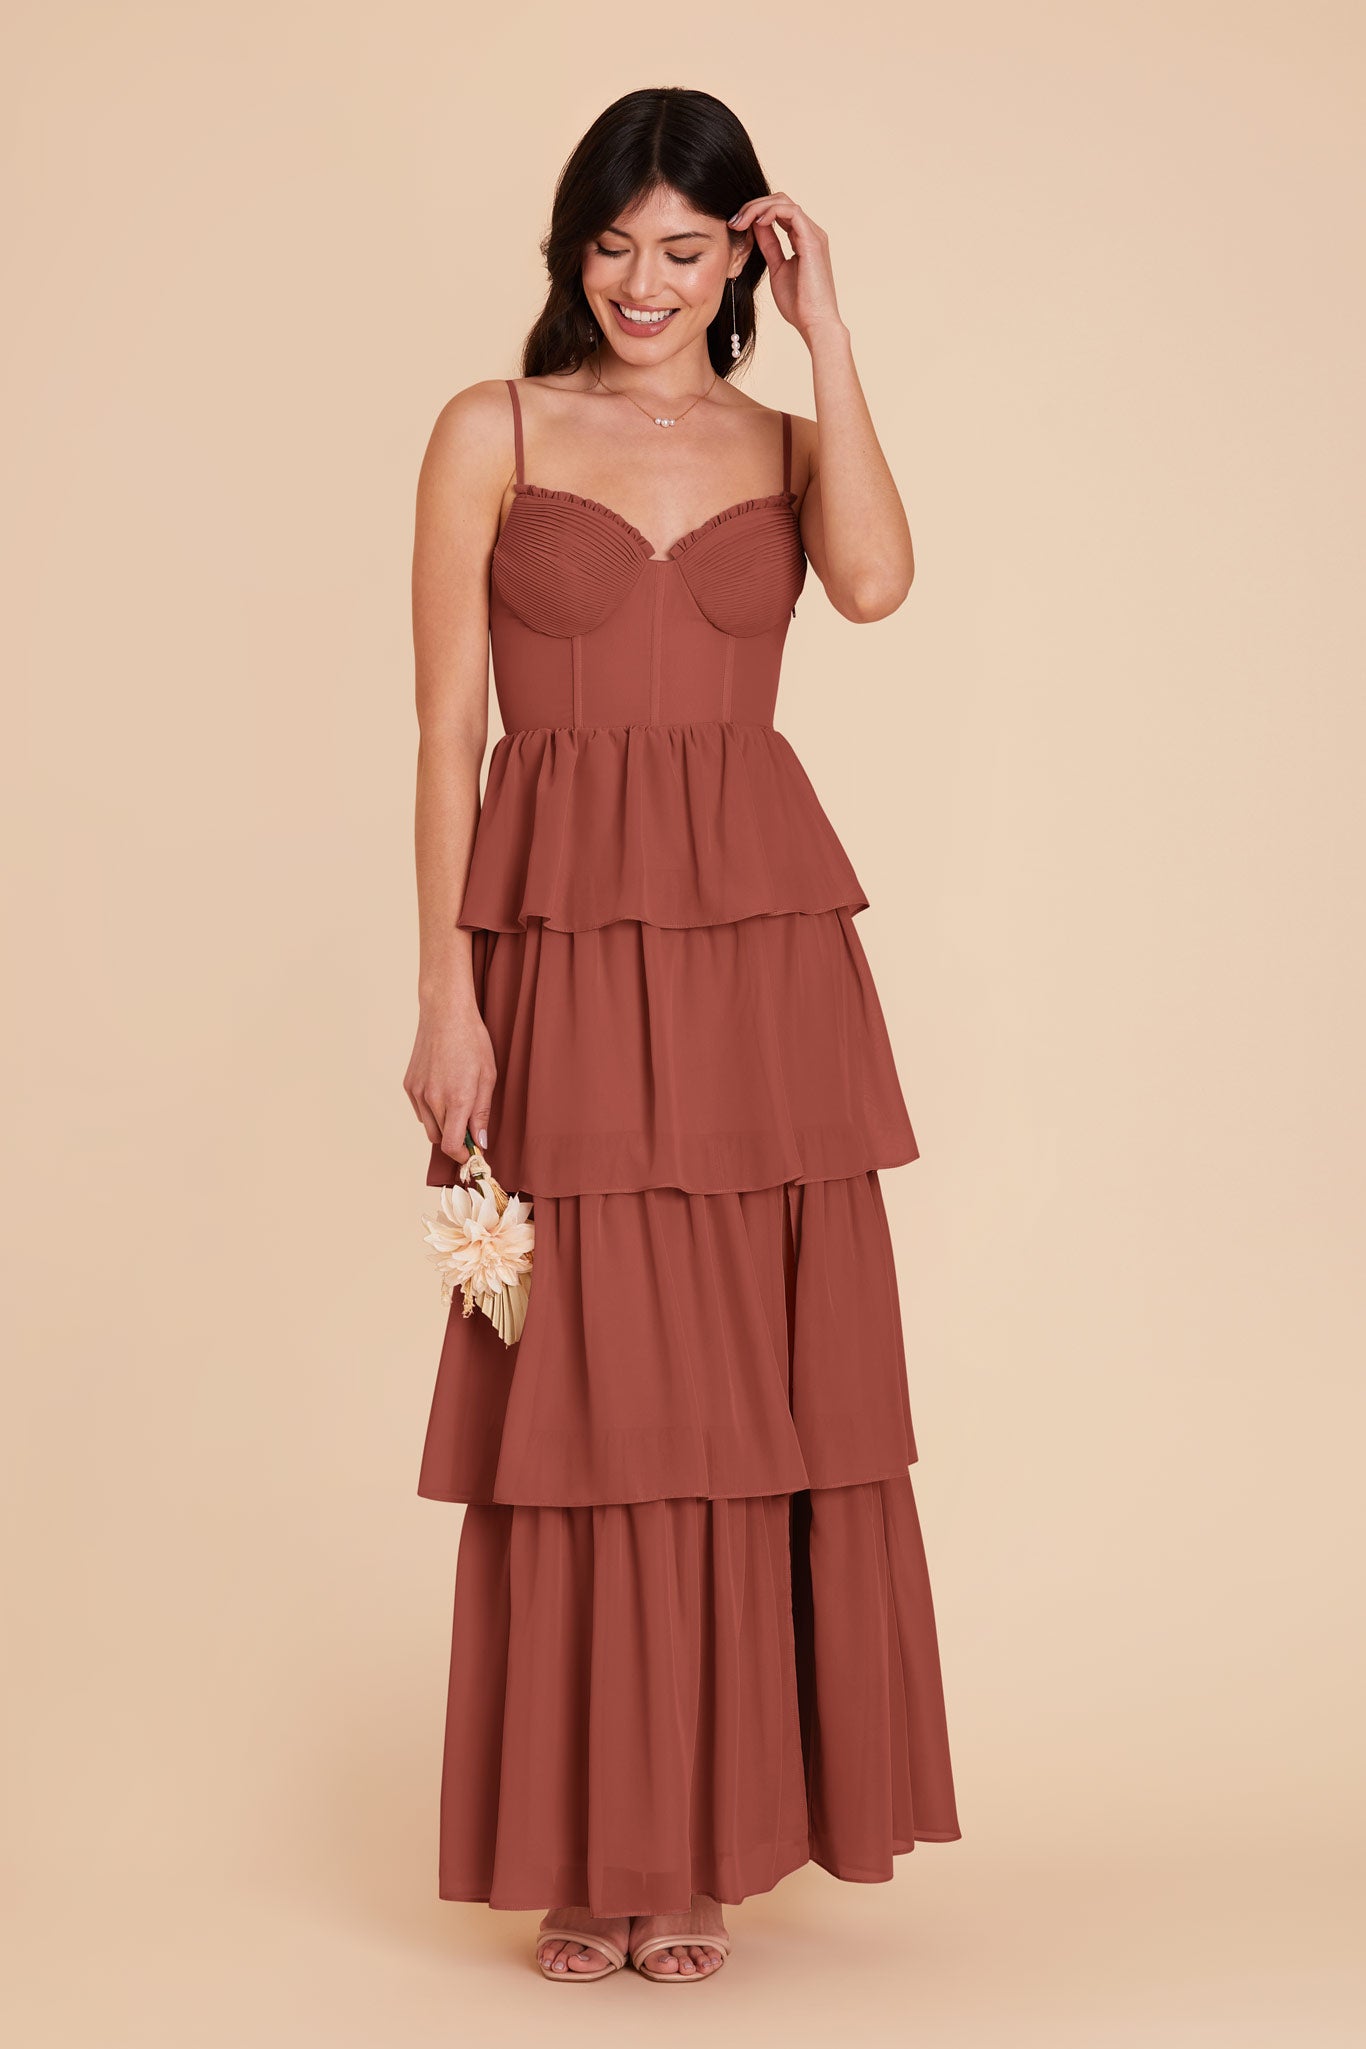 Desert Rose Lola Chiffon Dress by Birdy Grey